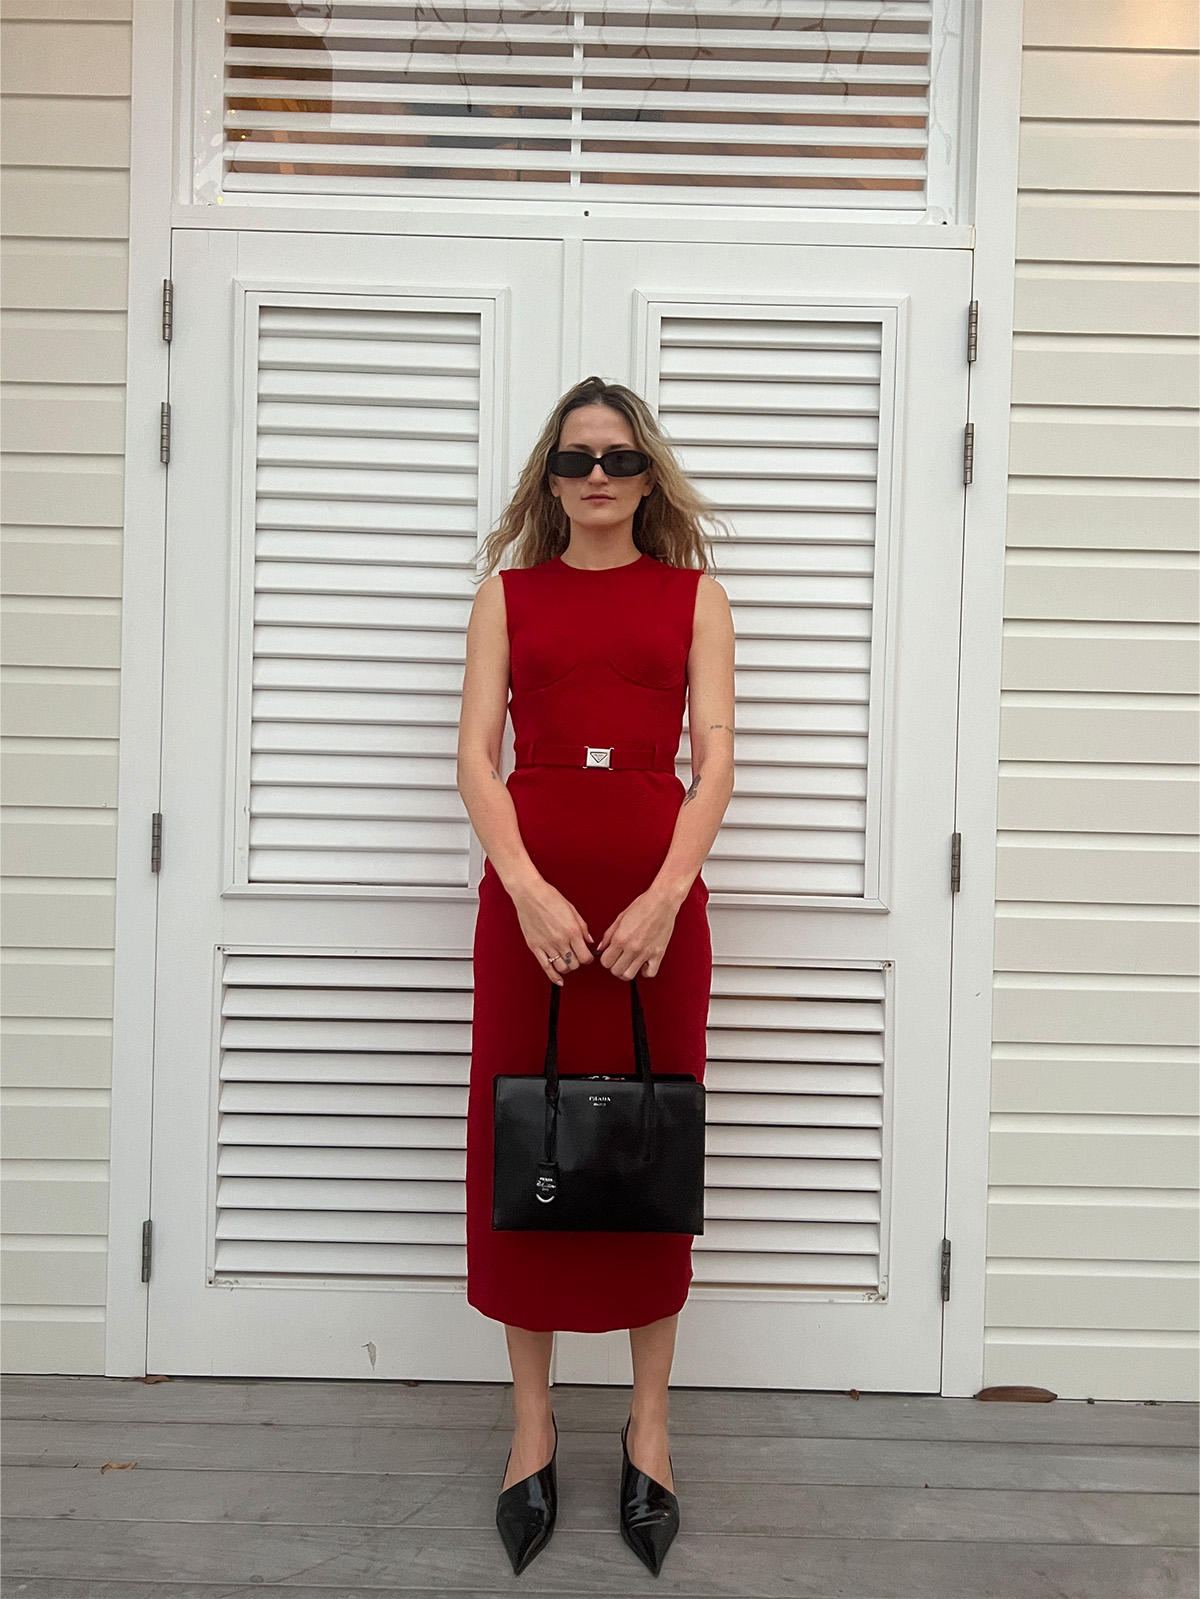 Eliza Huber wearing a red Prada dress with black Prada shoes and bag.